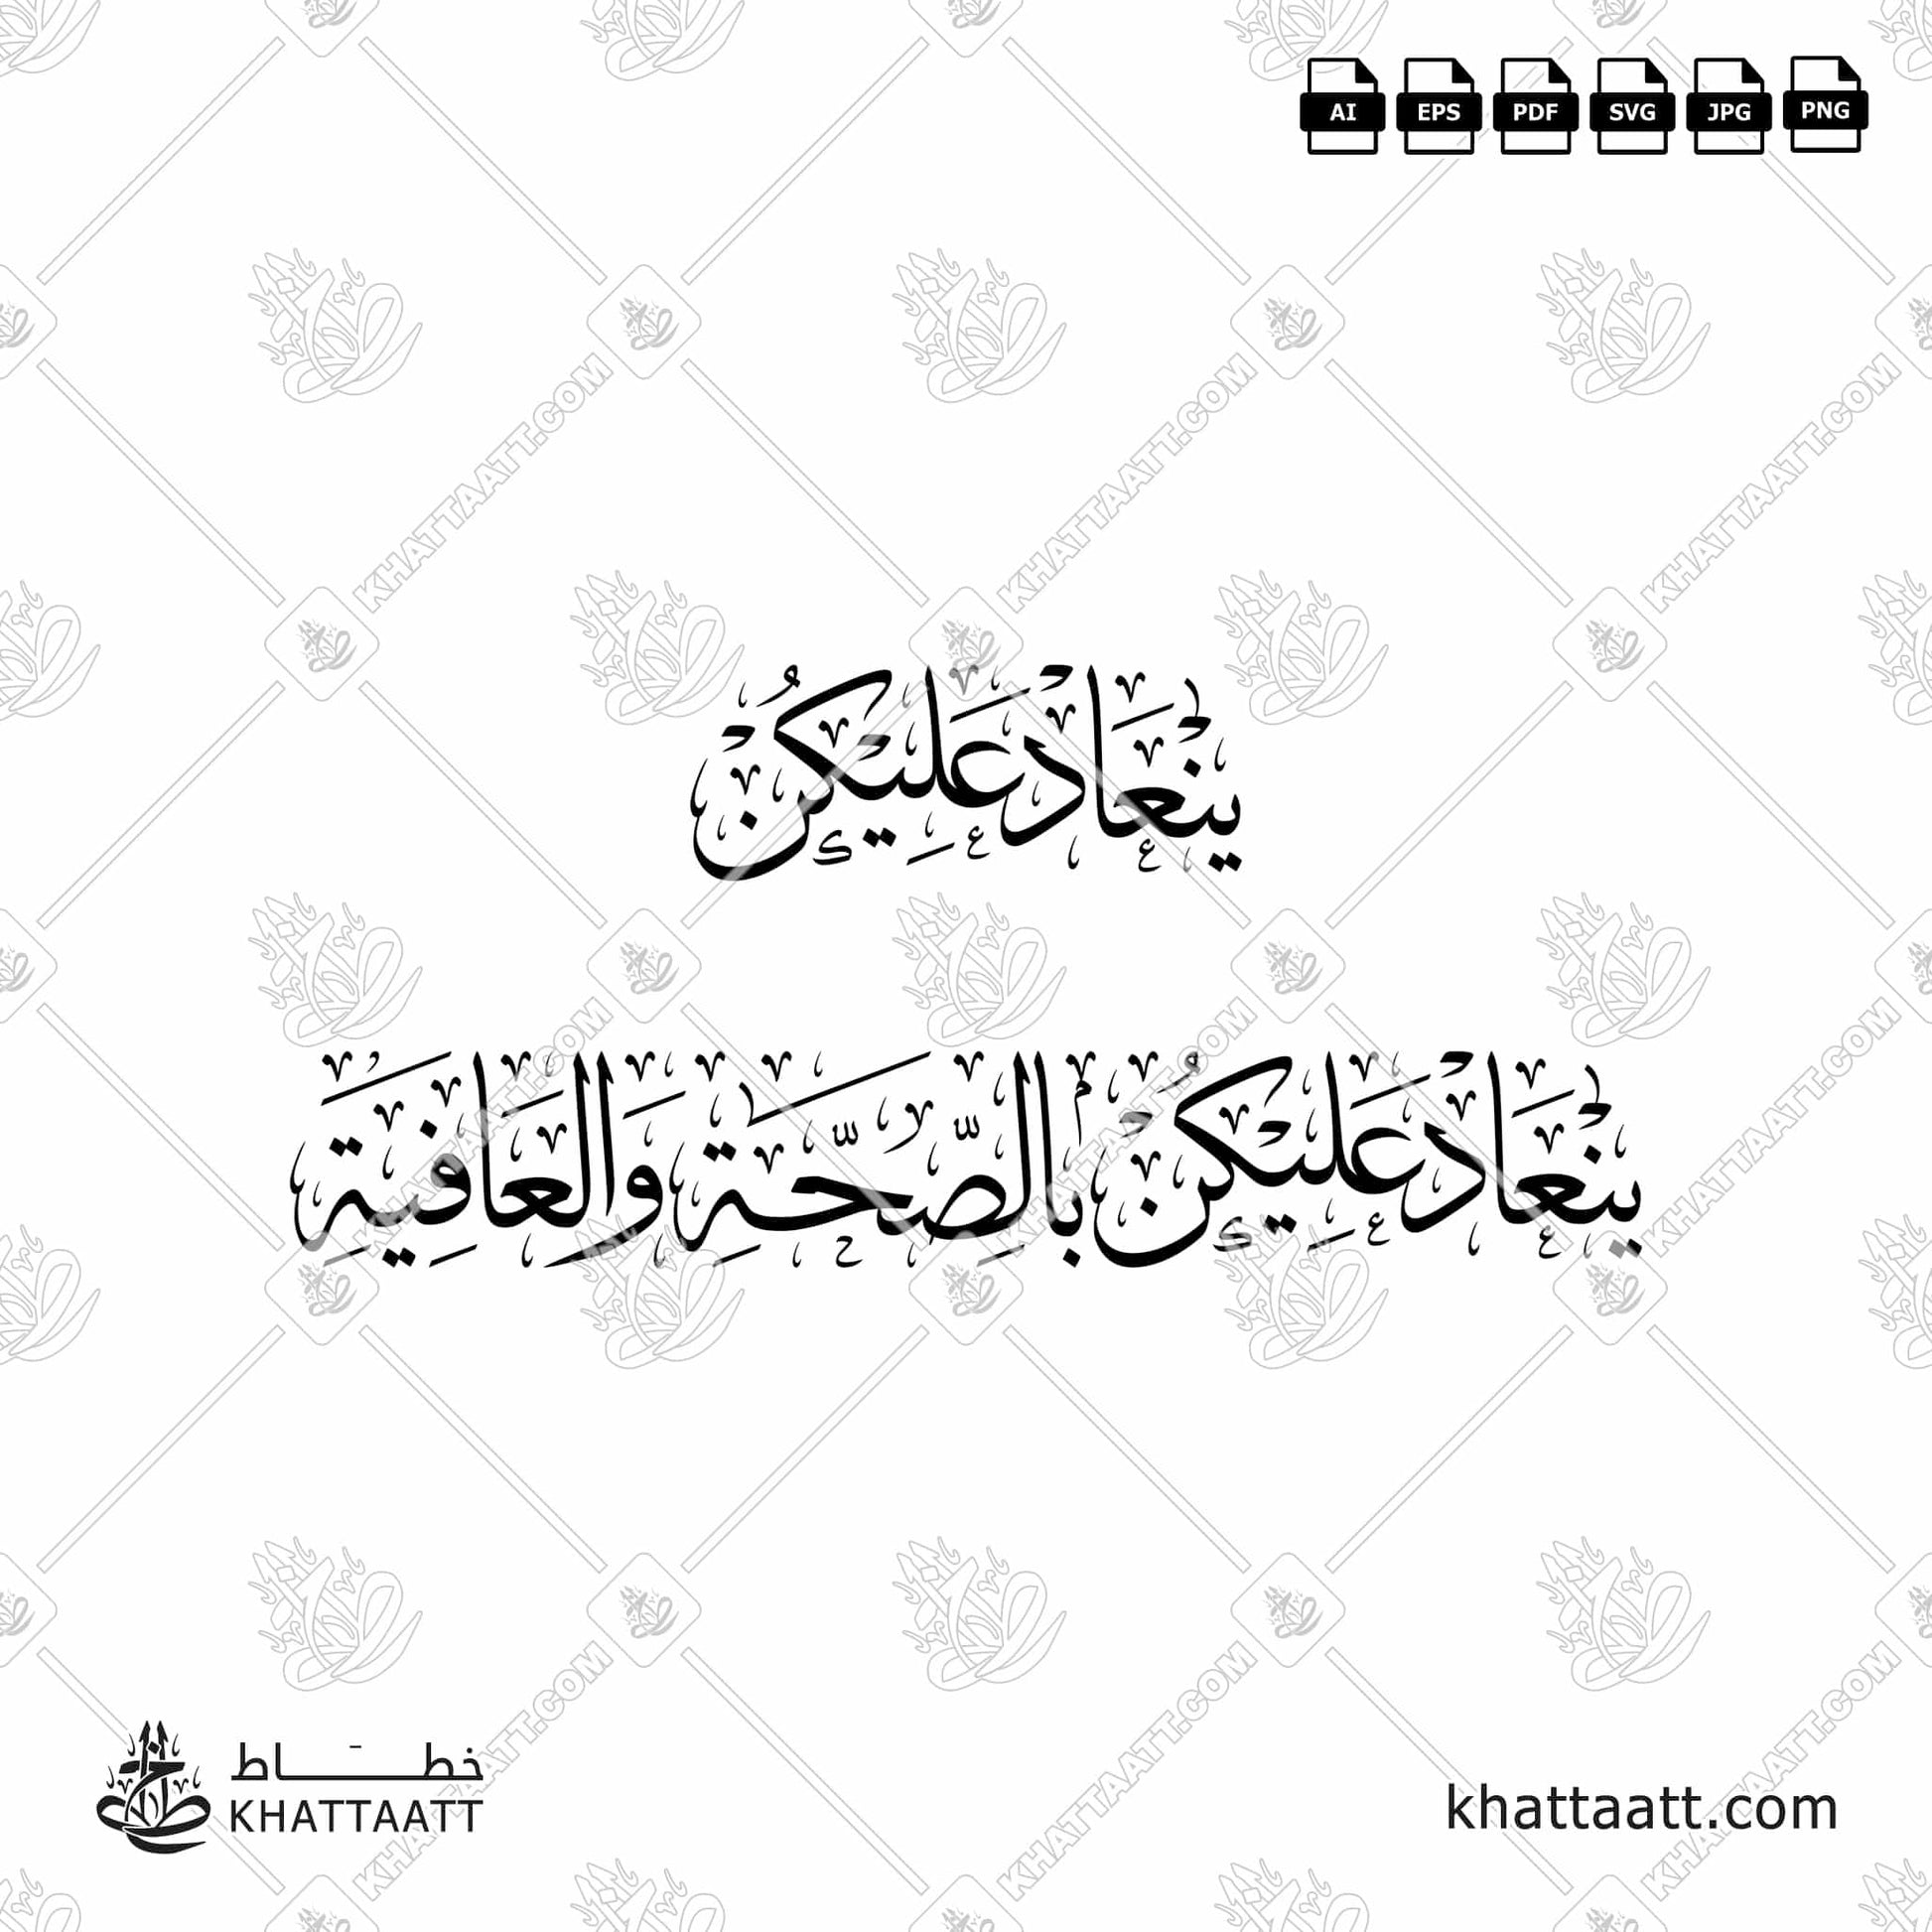 Arabic Calligraphy of ينعاد عليكن and ينعاد عليكن بالصحة والعافية in Thuluth Script خط الثلث.